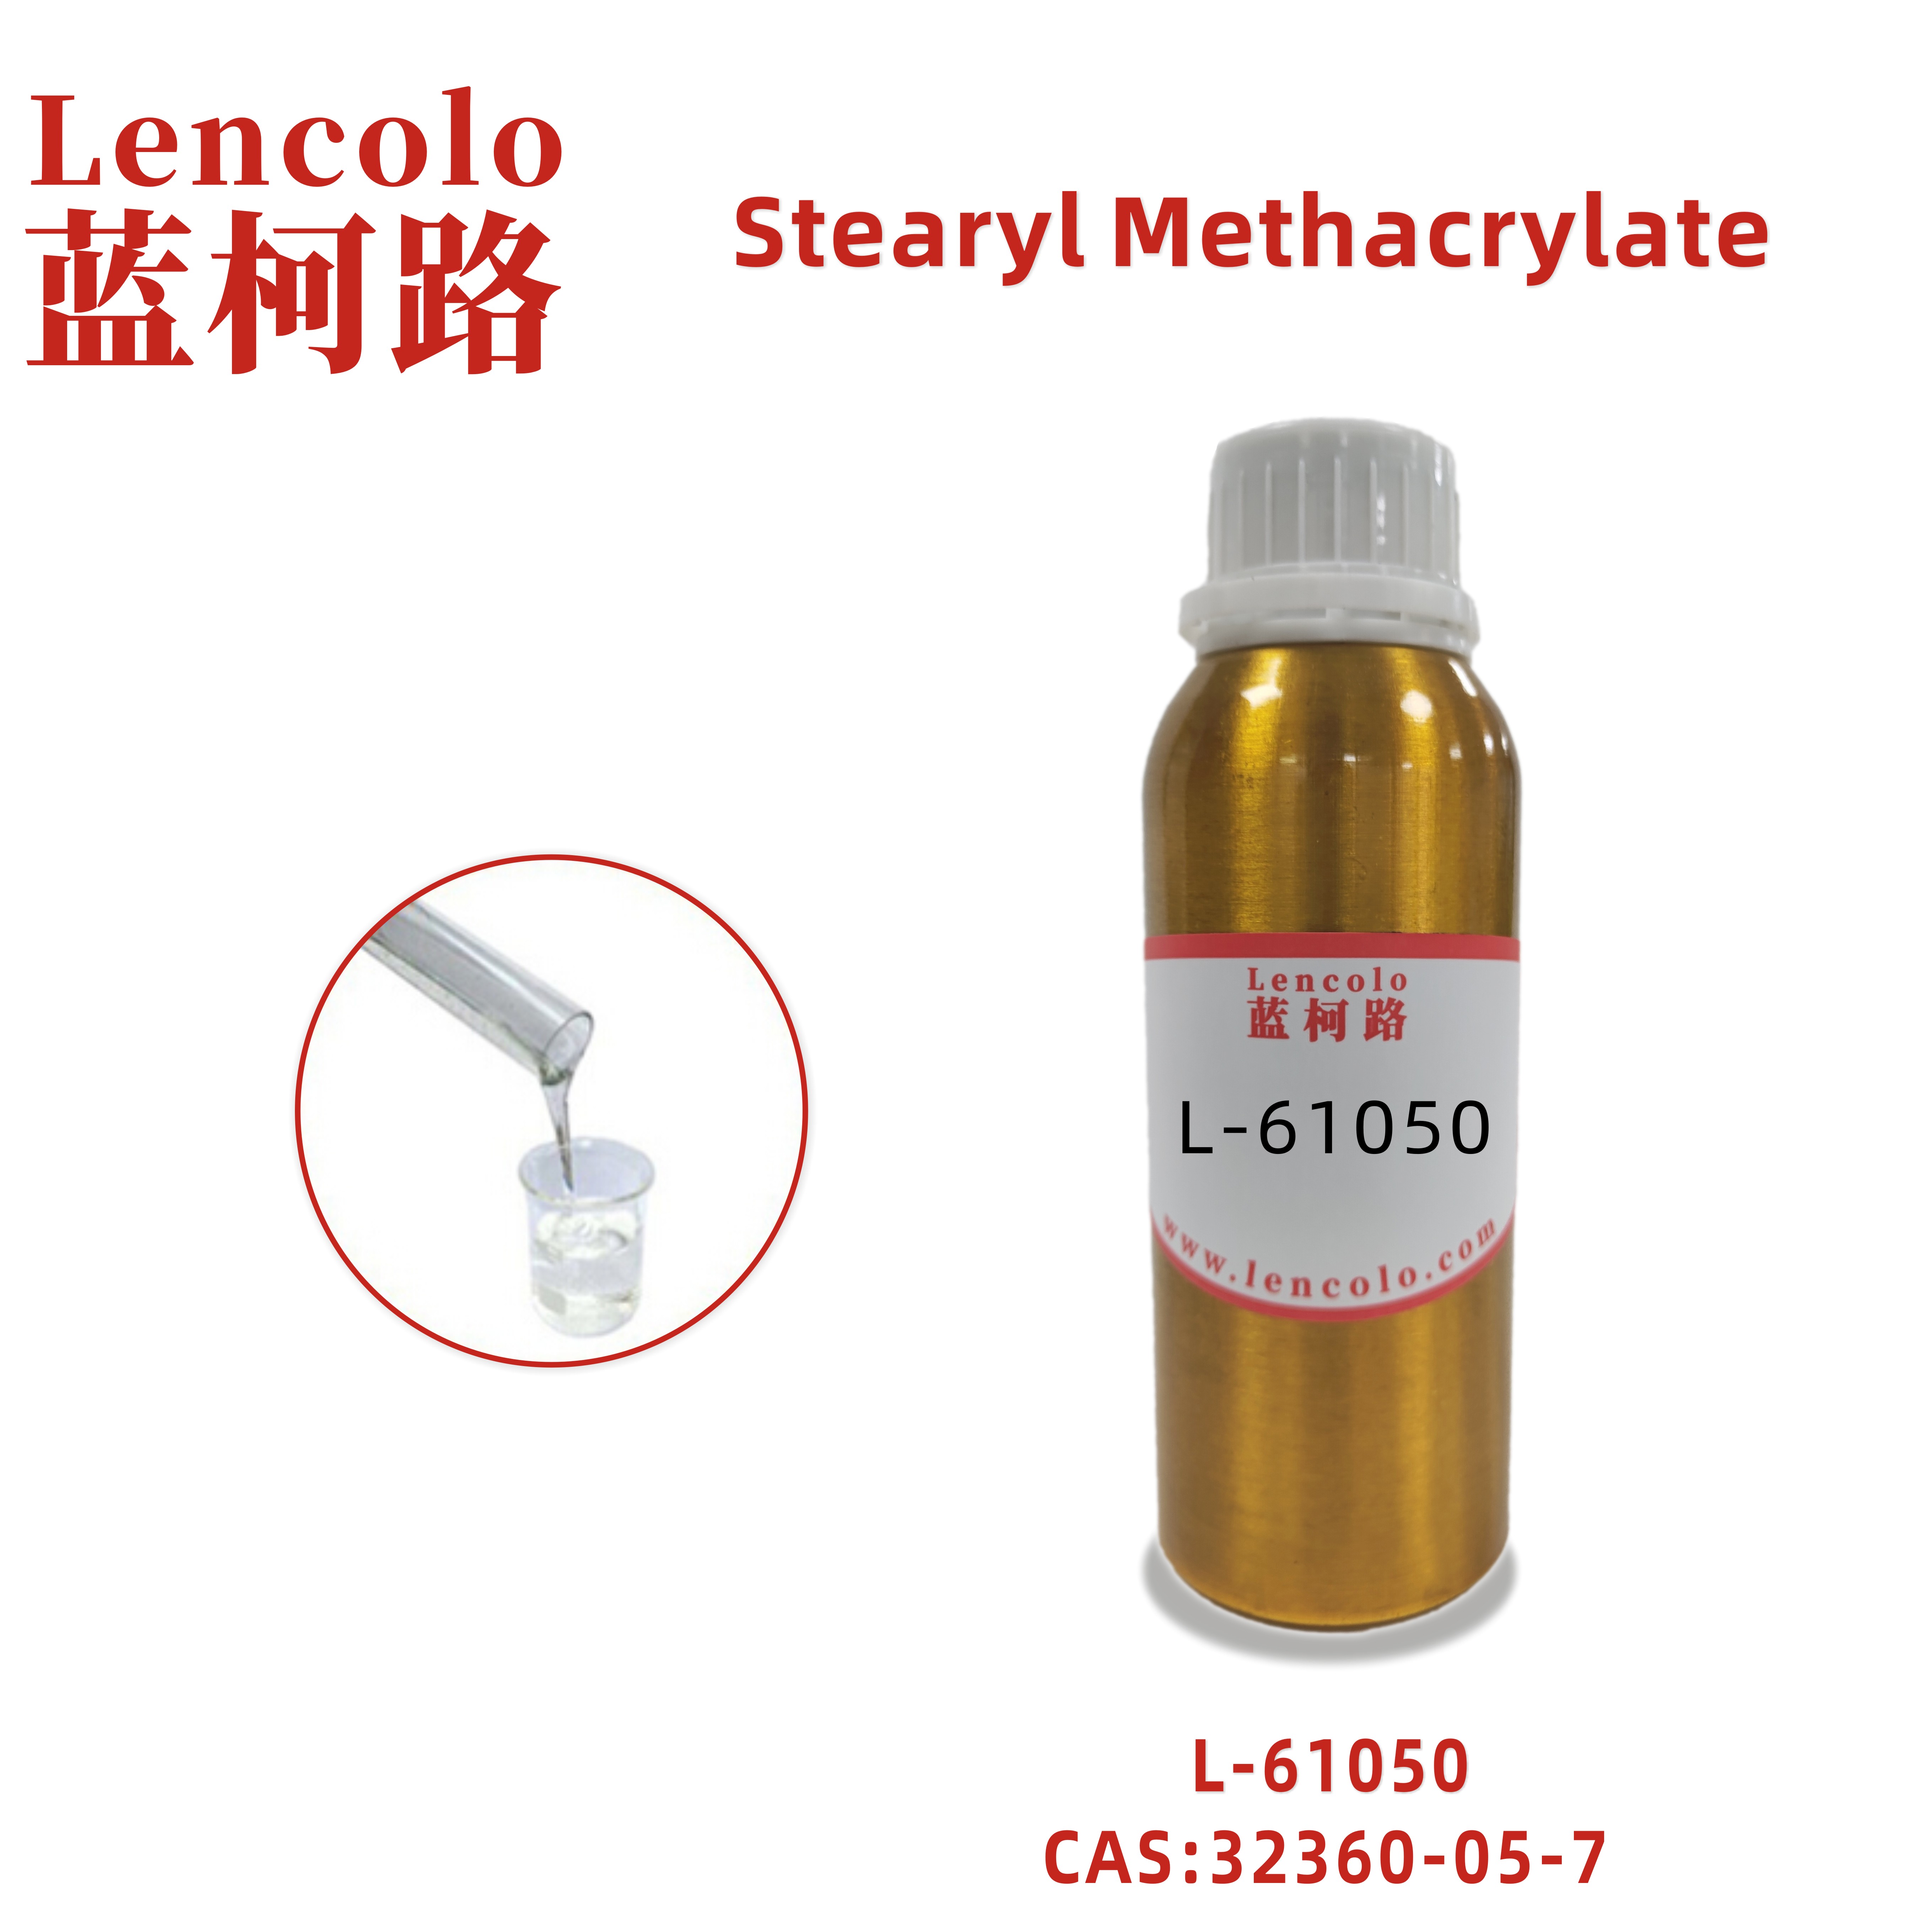 L-61050 (SMA) Stearyl Methacrylate